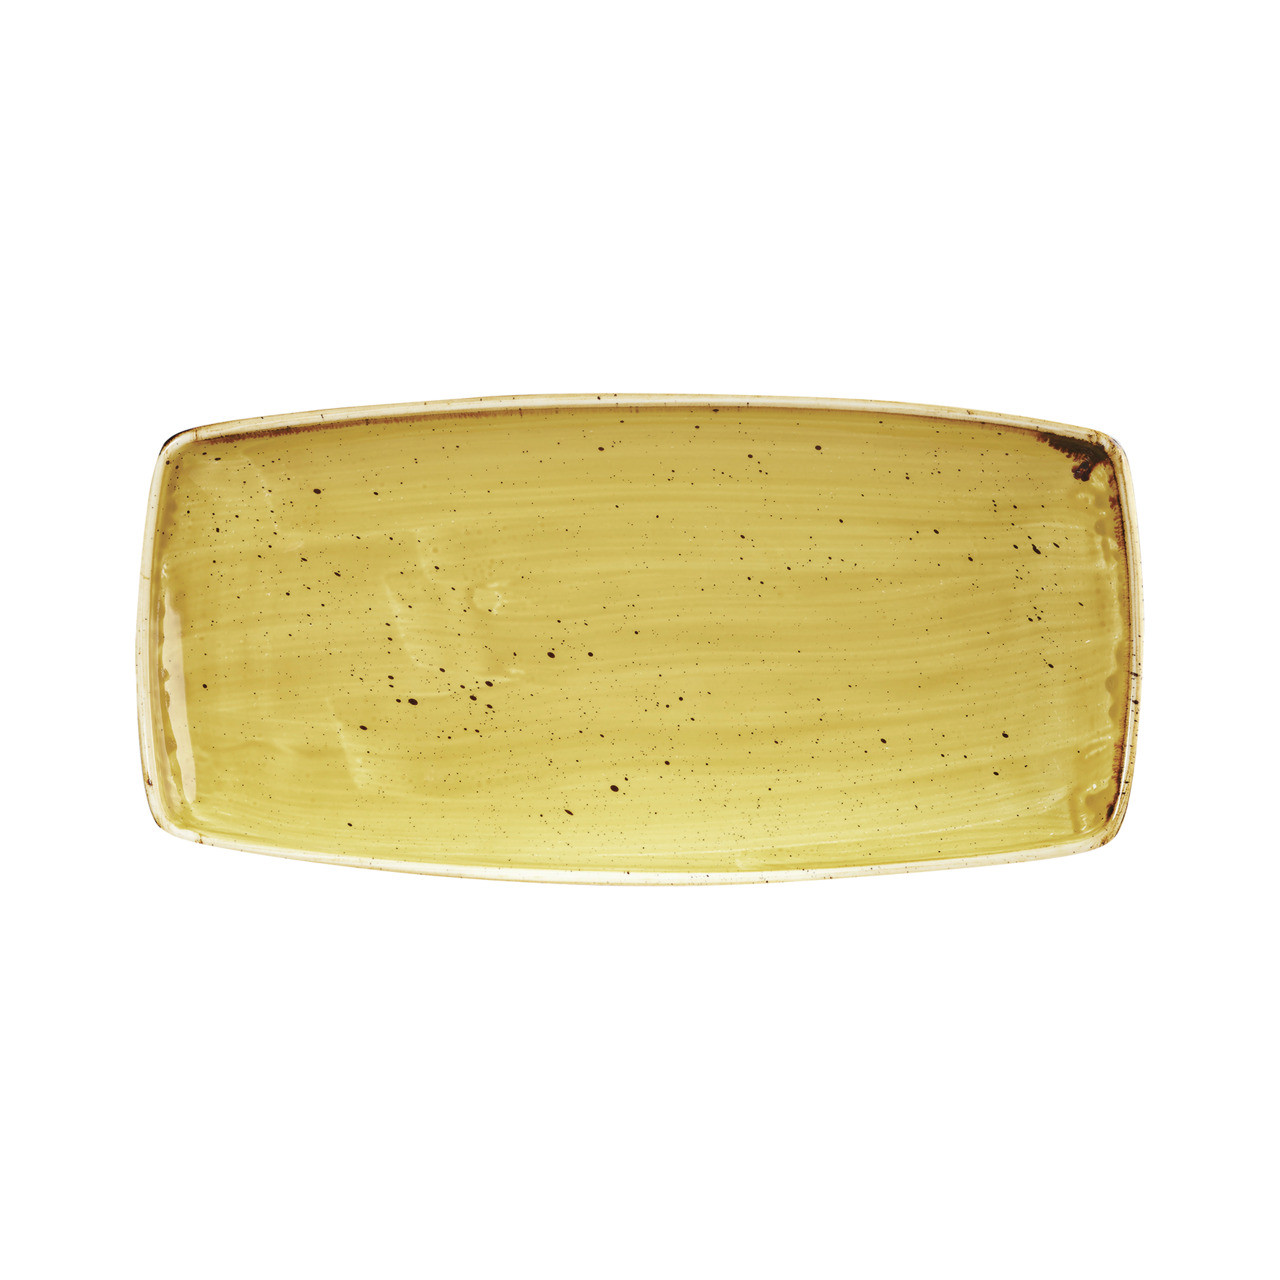 Stonecast, Teller rechteckig 295 x 140 mm Mustard Seed Yellow